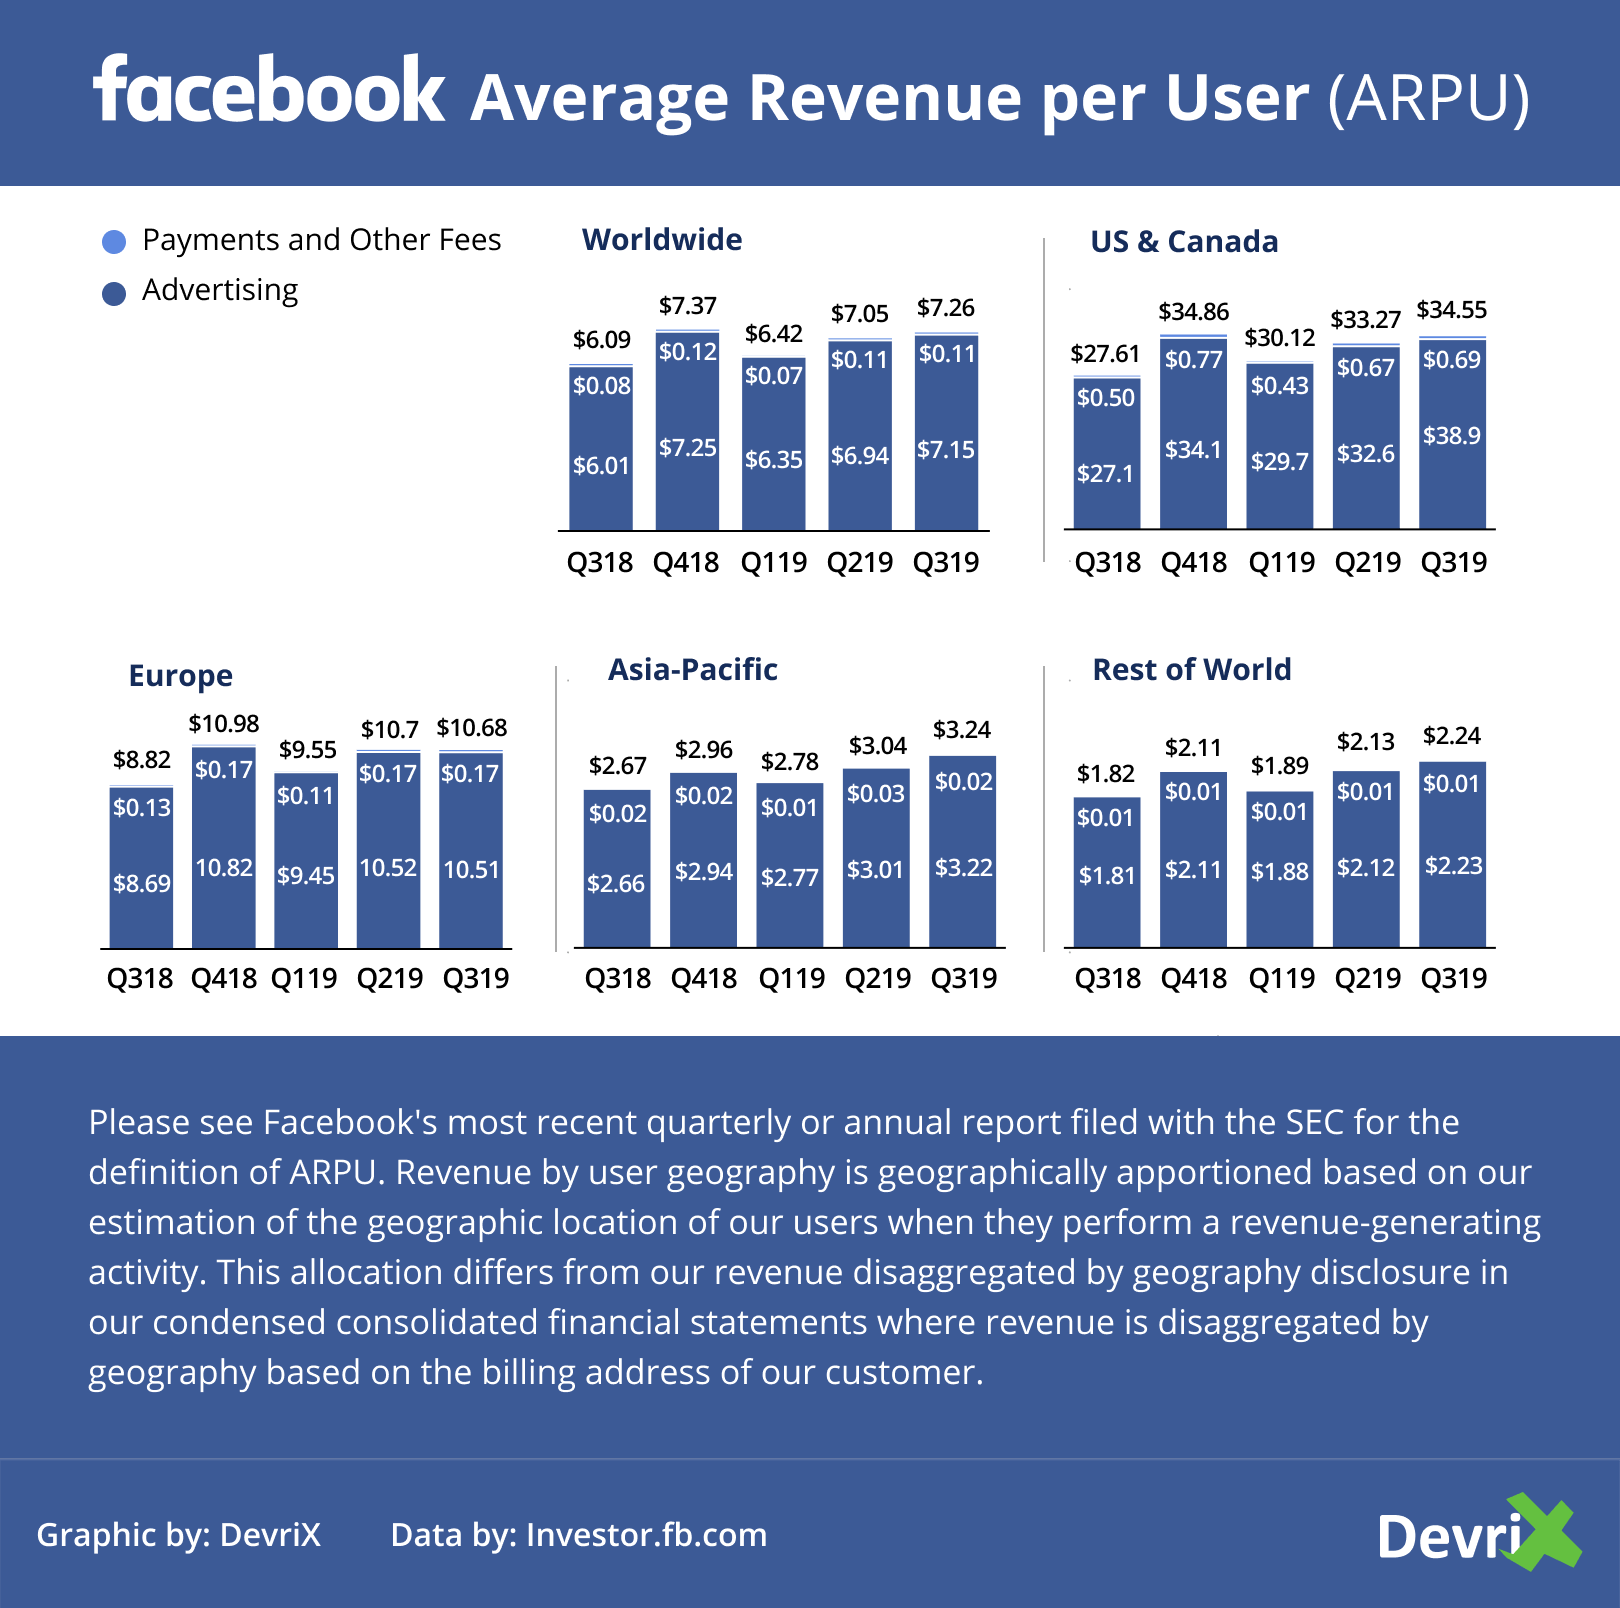 Average Revenue per User (ARPU)